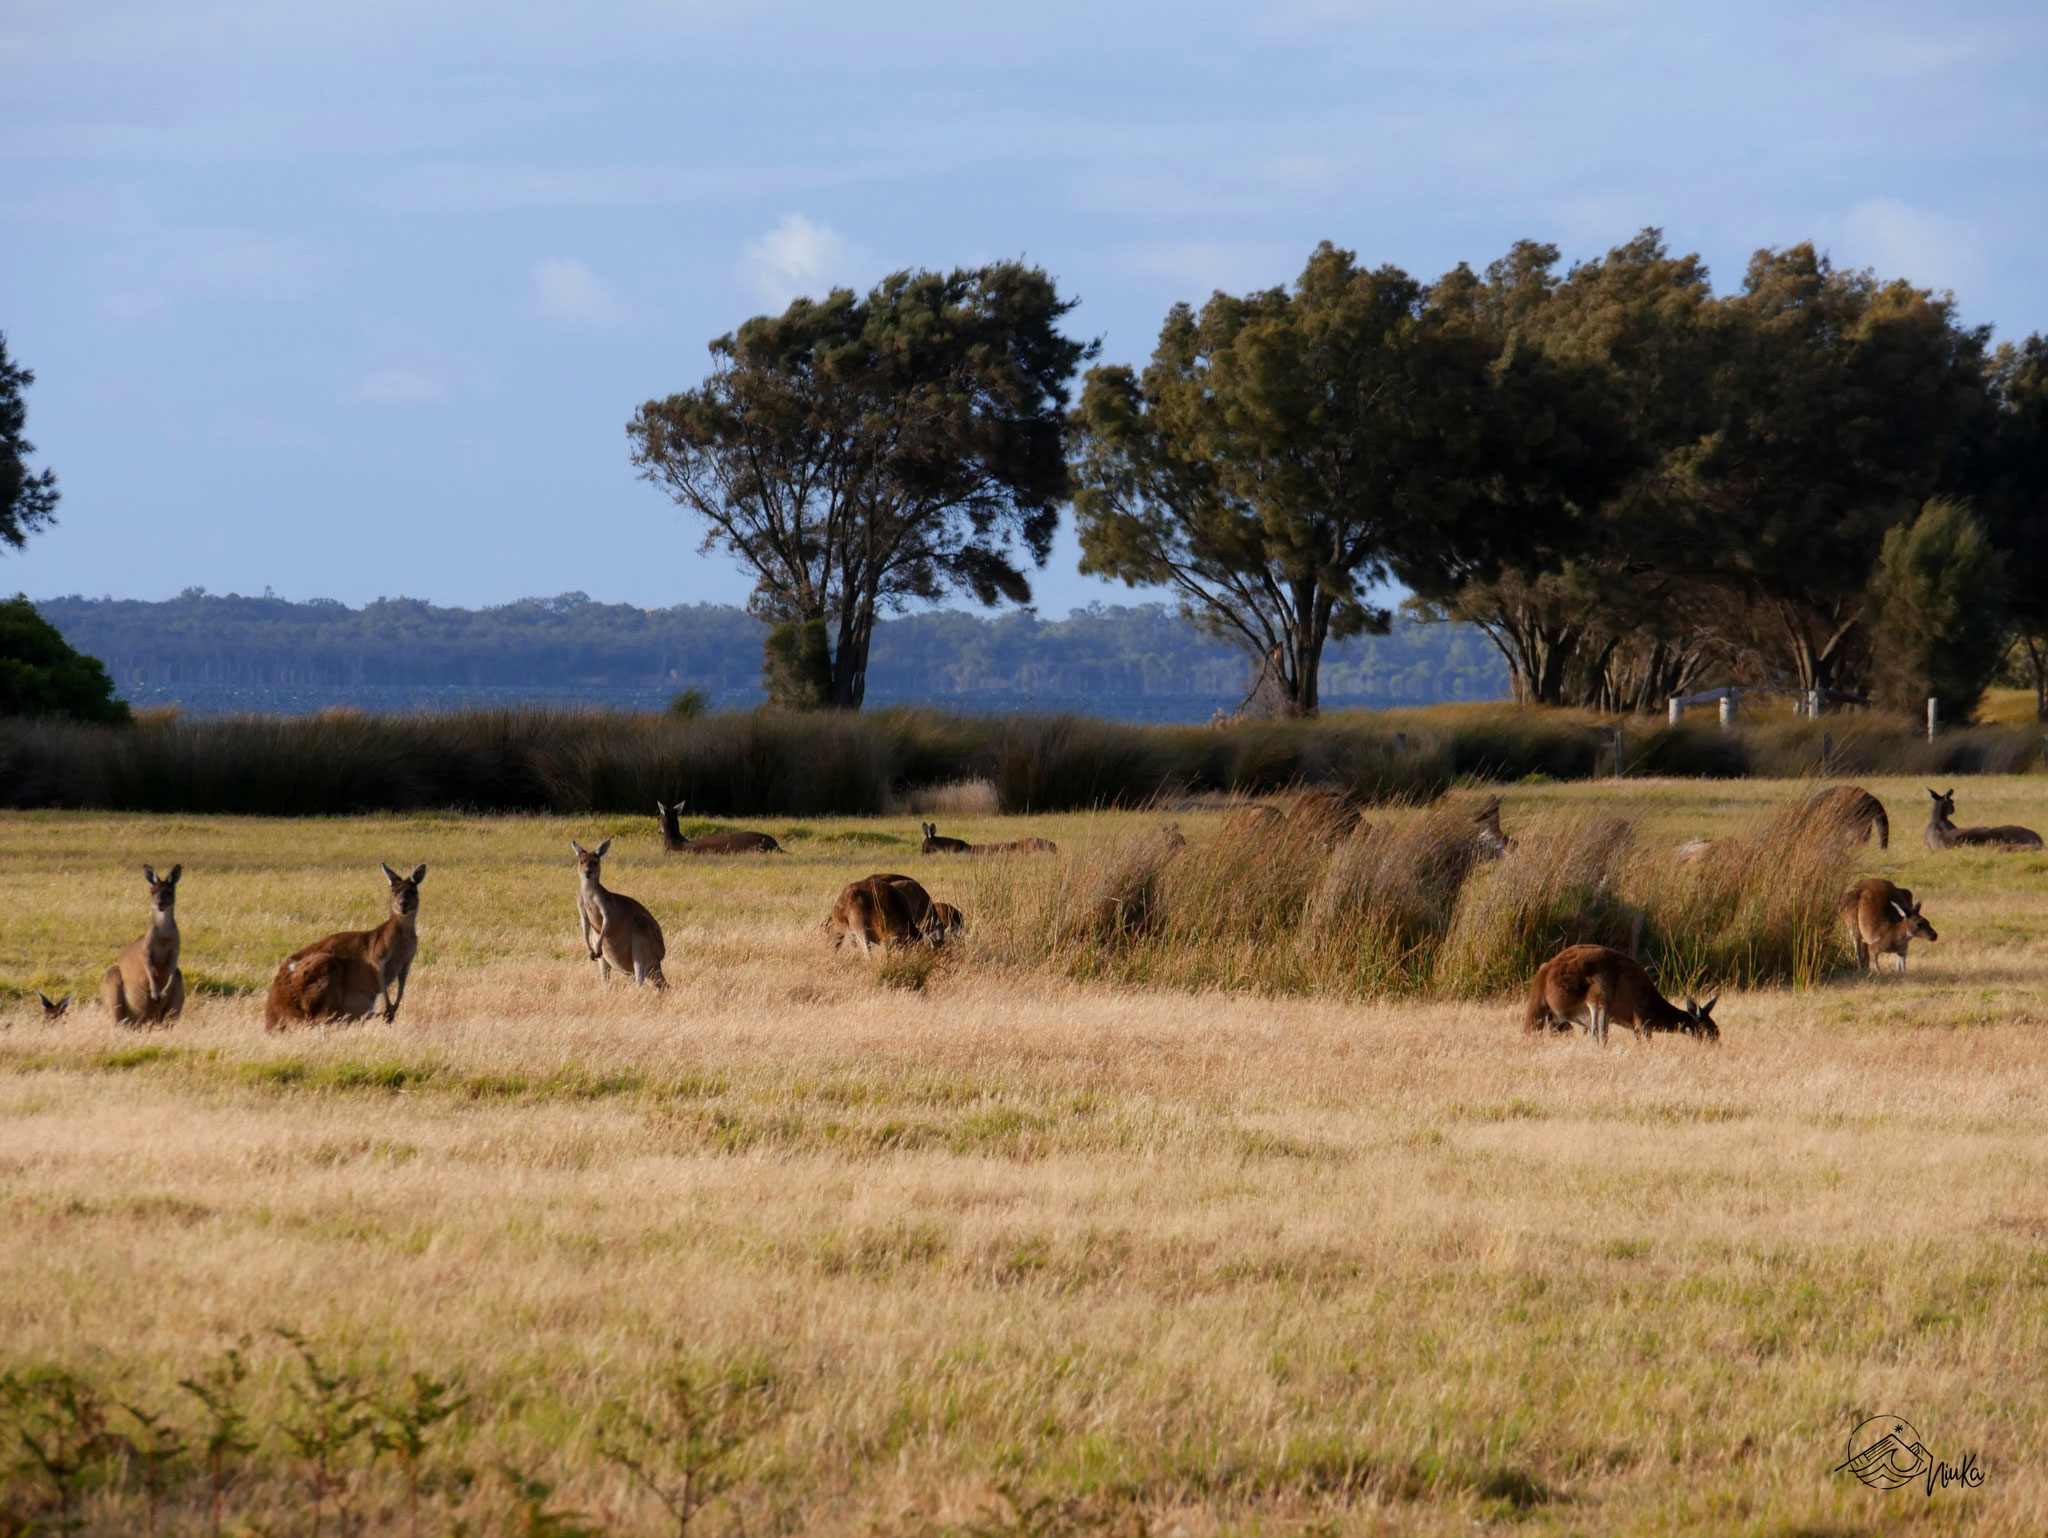 Kangaroos in Australind